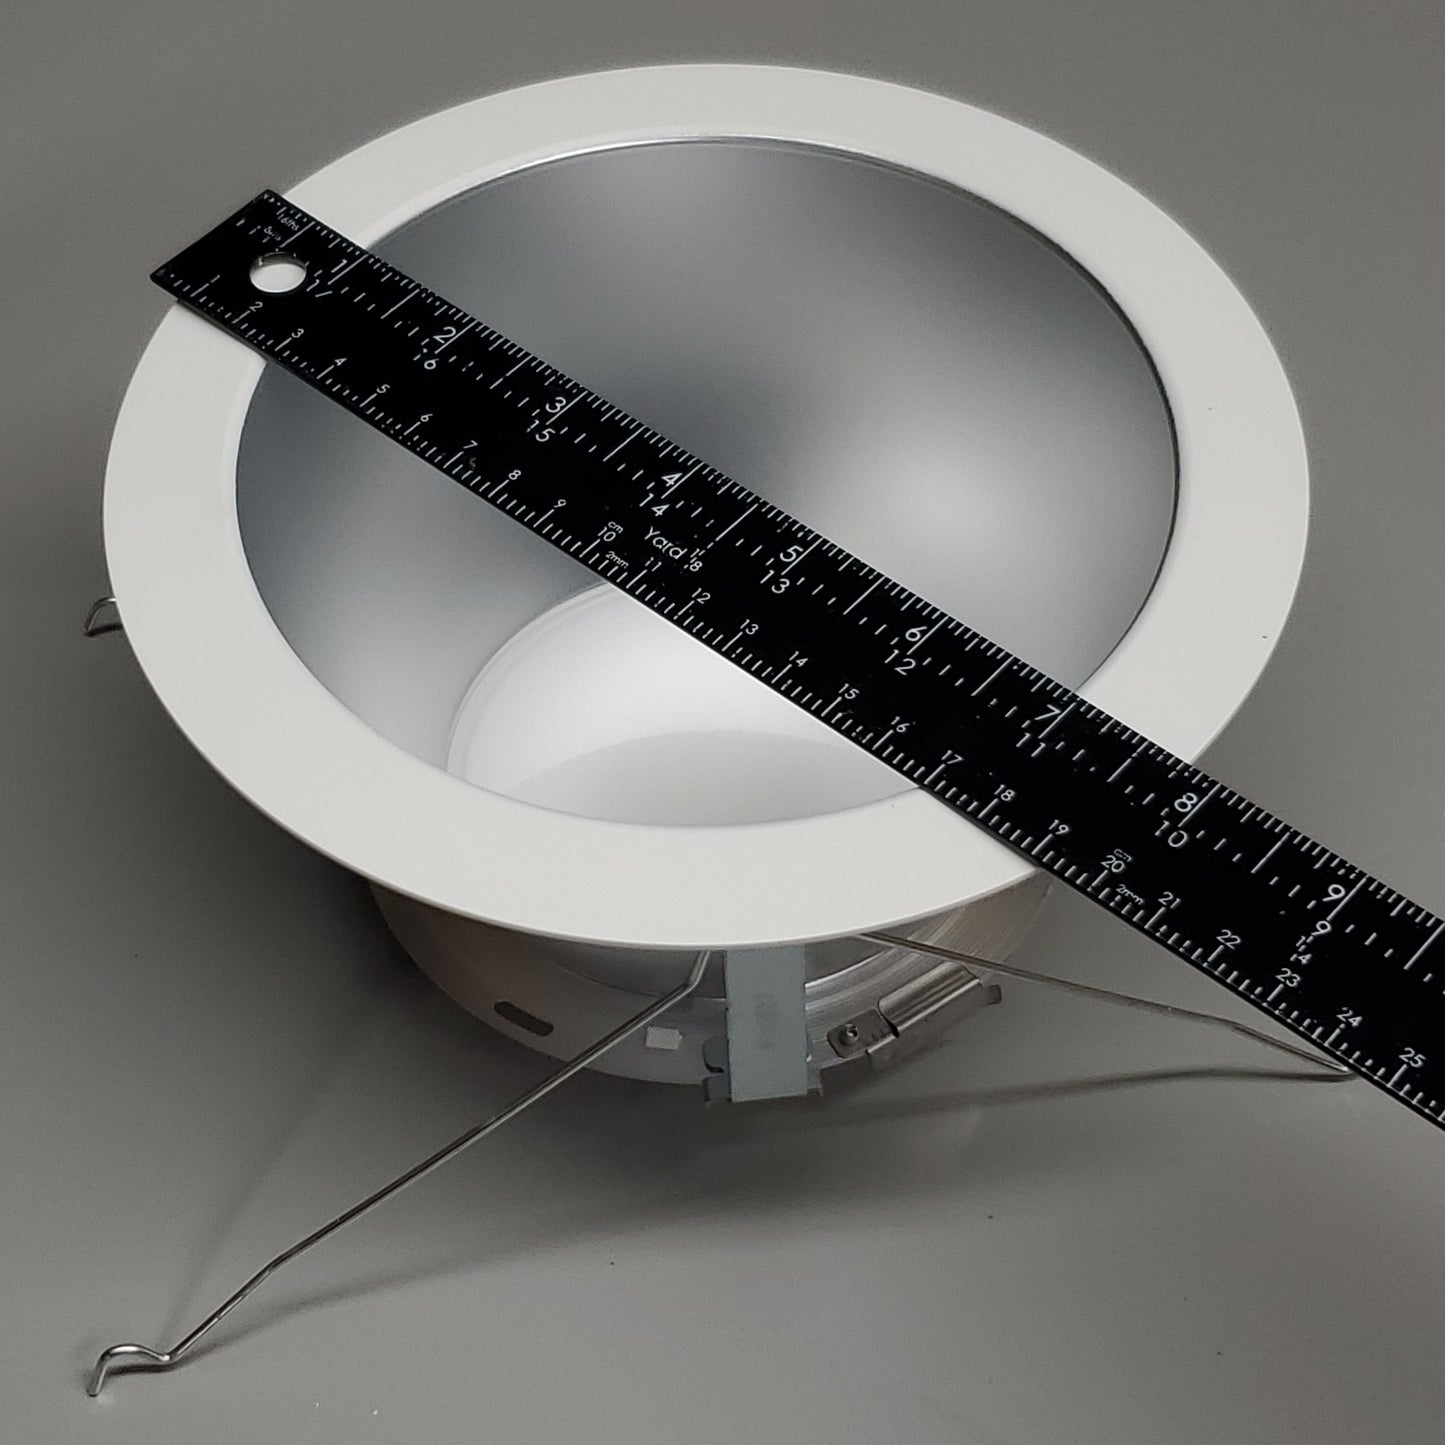 ZA@ HALO Commercial 6PK Lighting Lense & Reflector Trims 6" White HC6 64MDHWF (New)